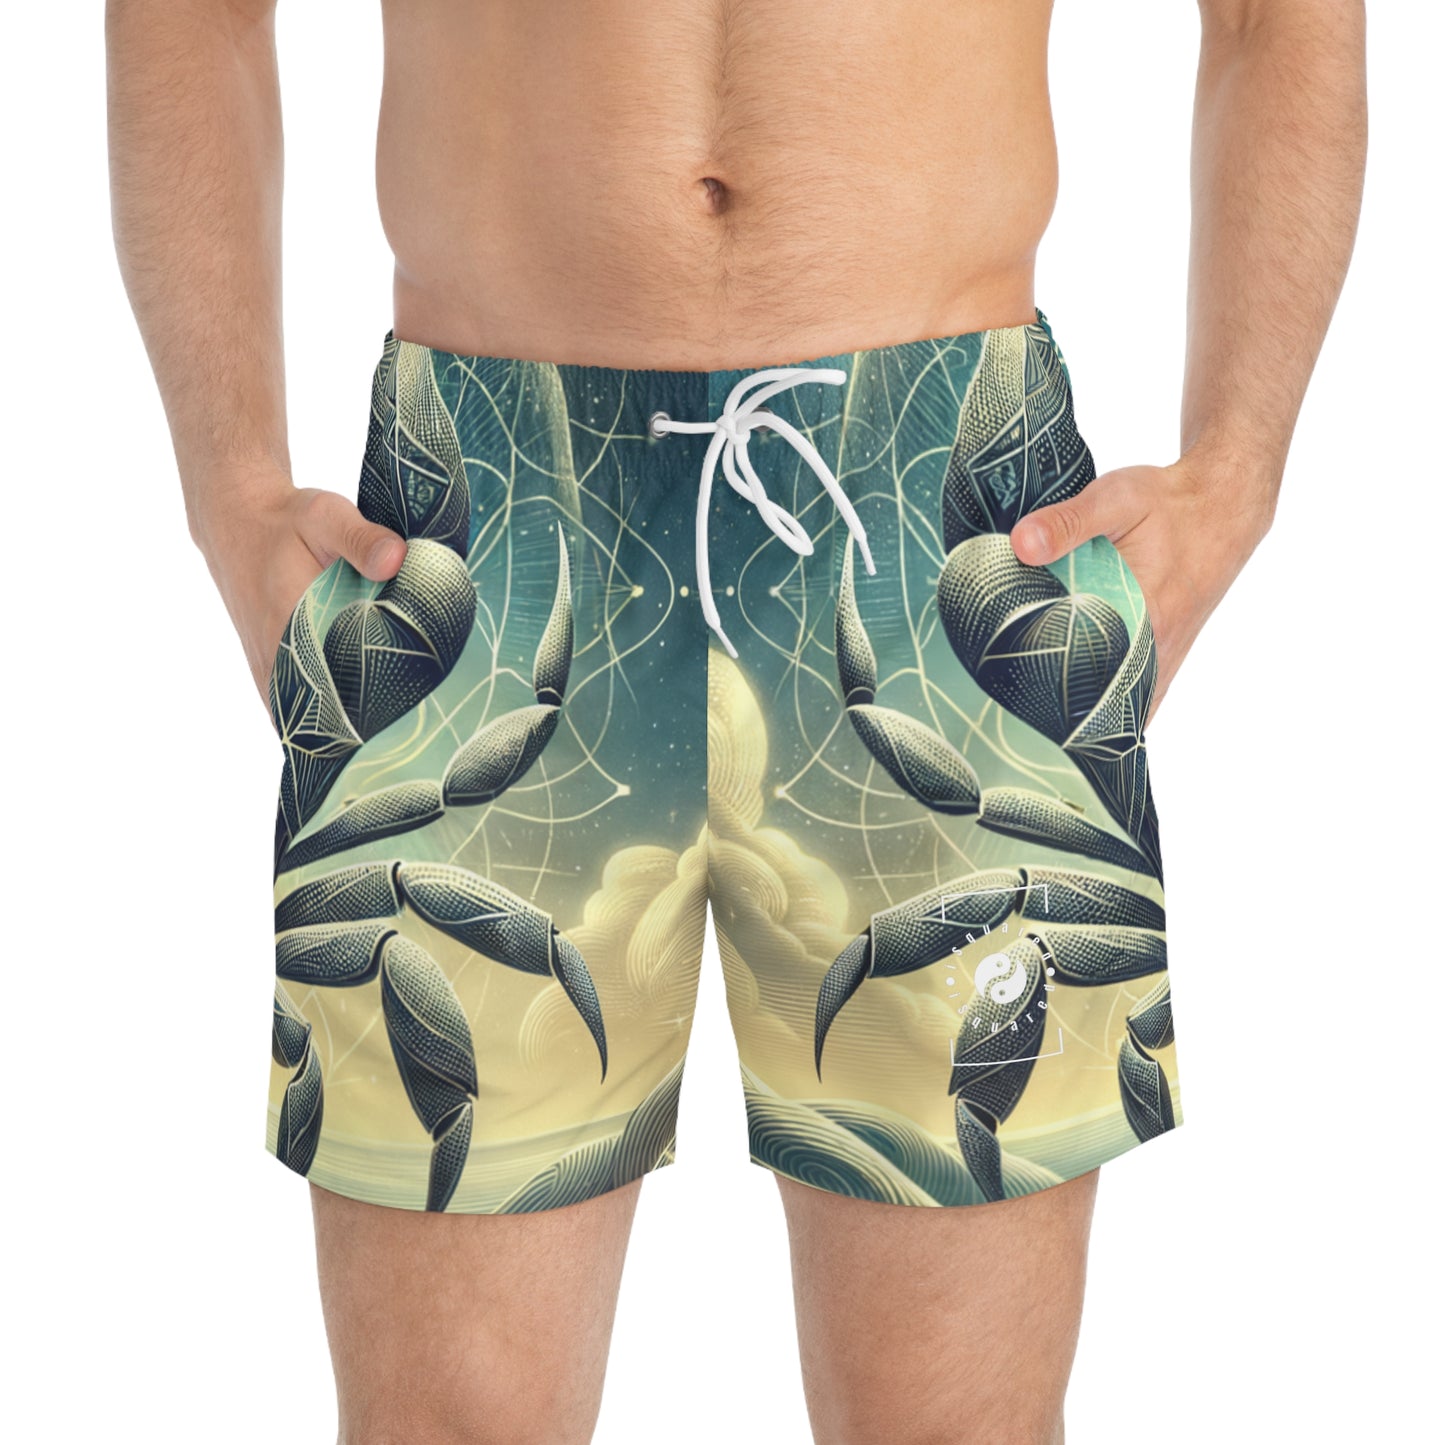 Crab Constellation Yoga - Swim Trunks for Men